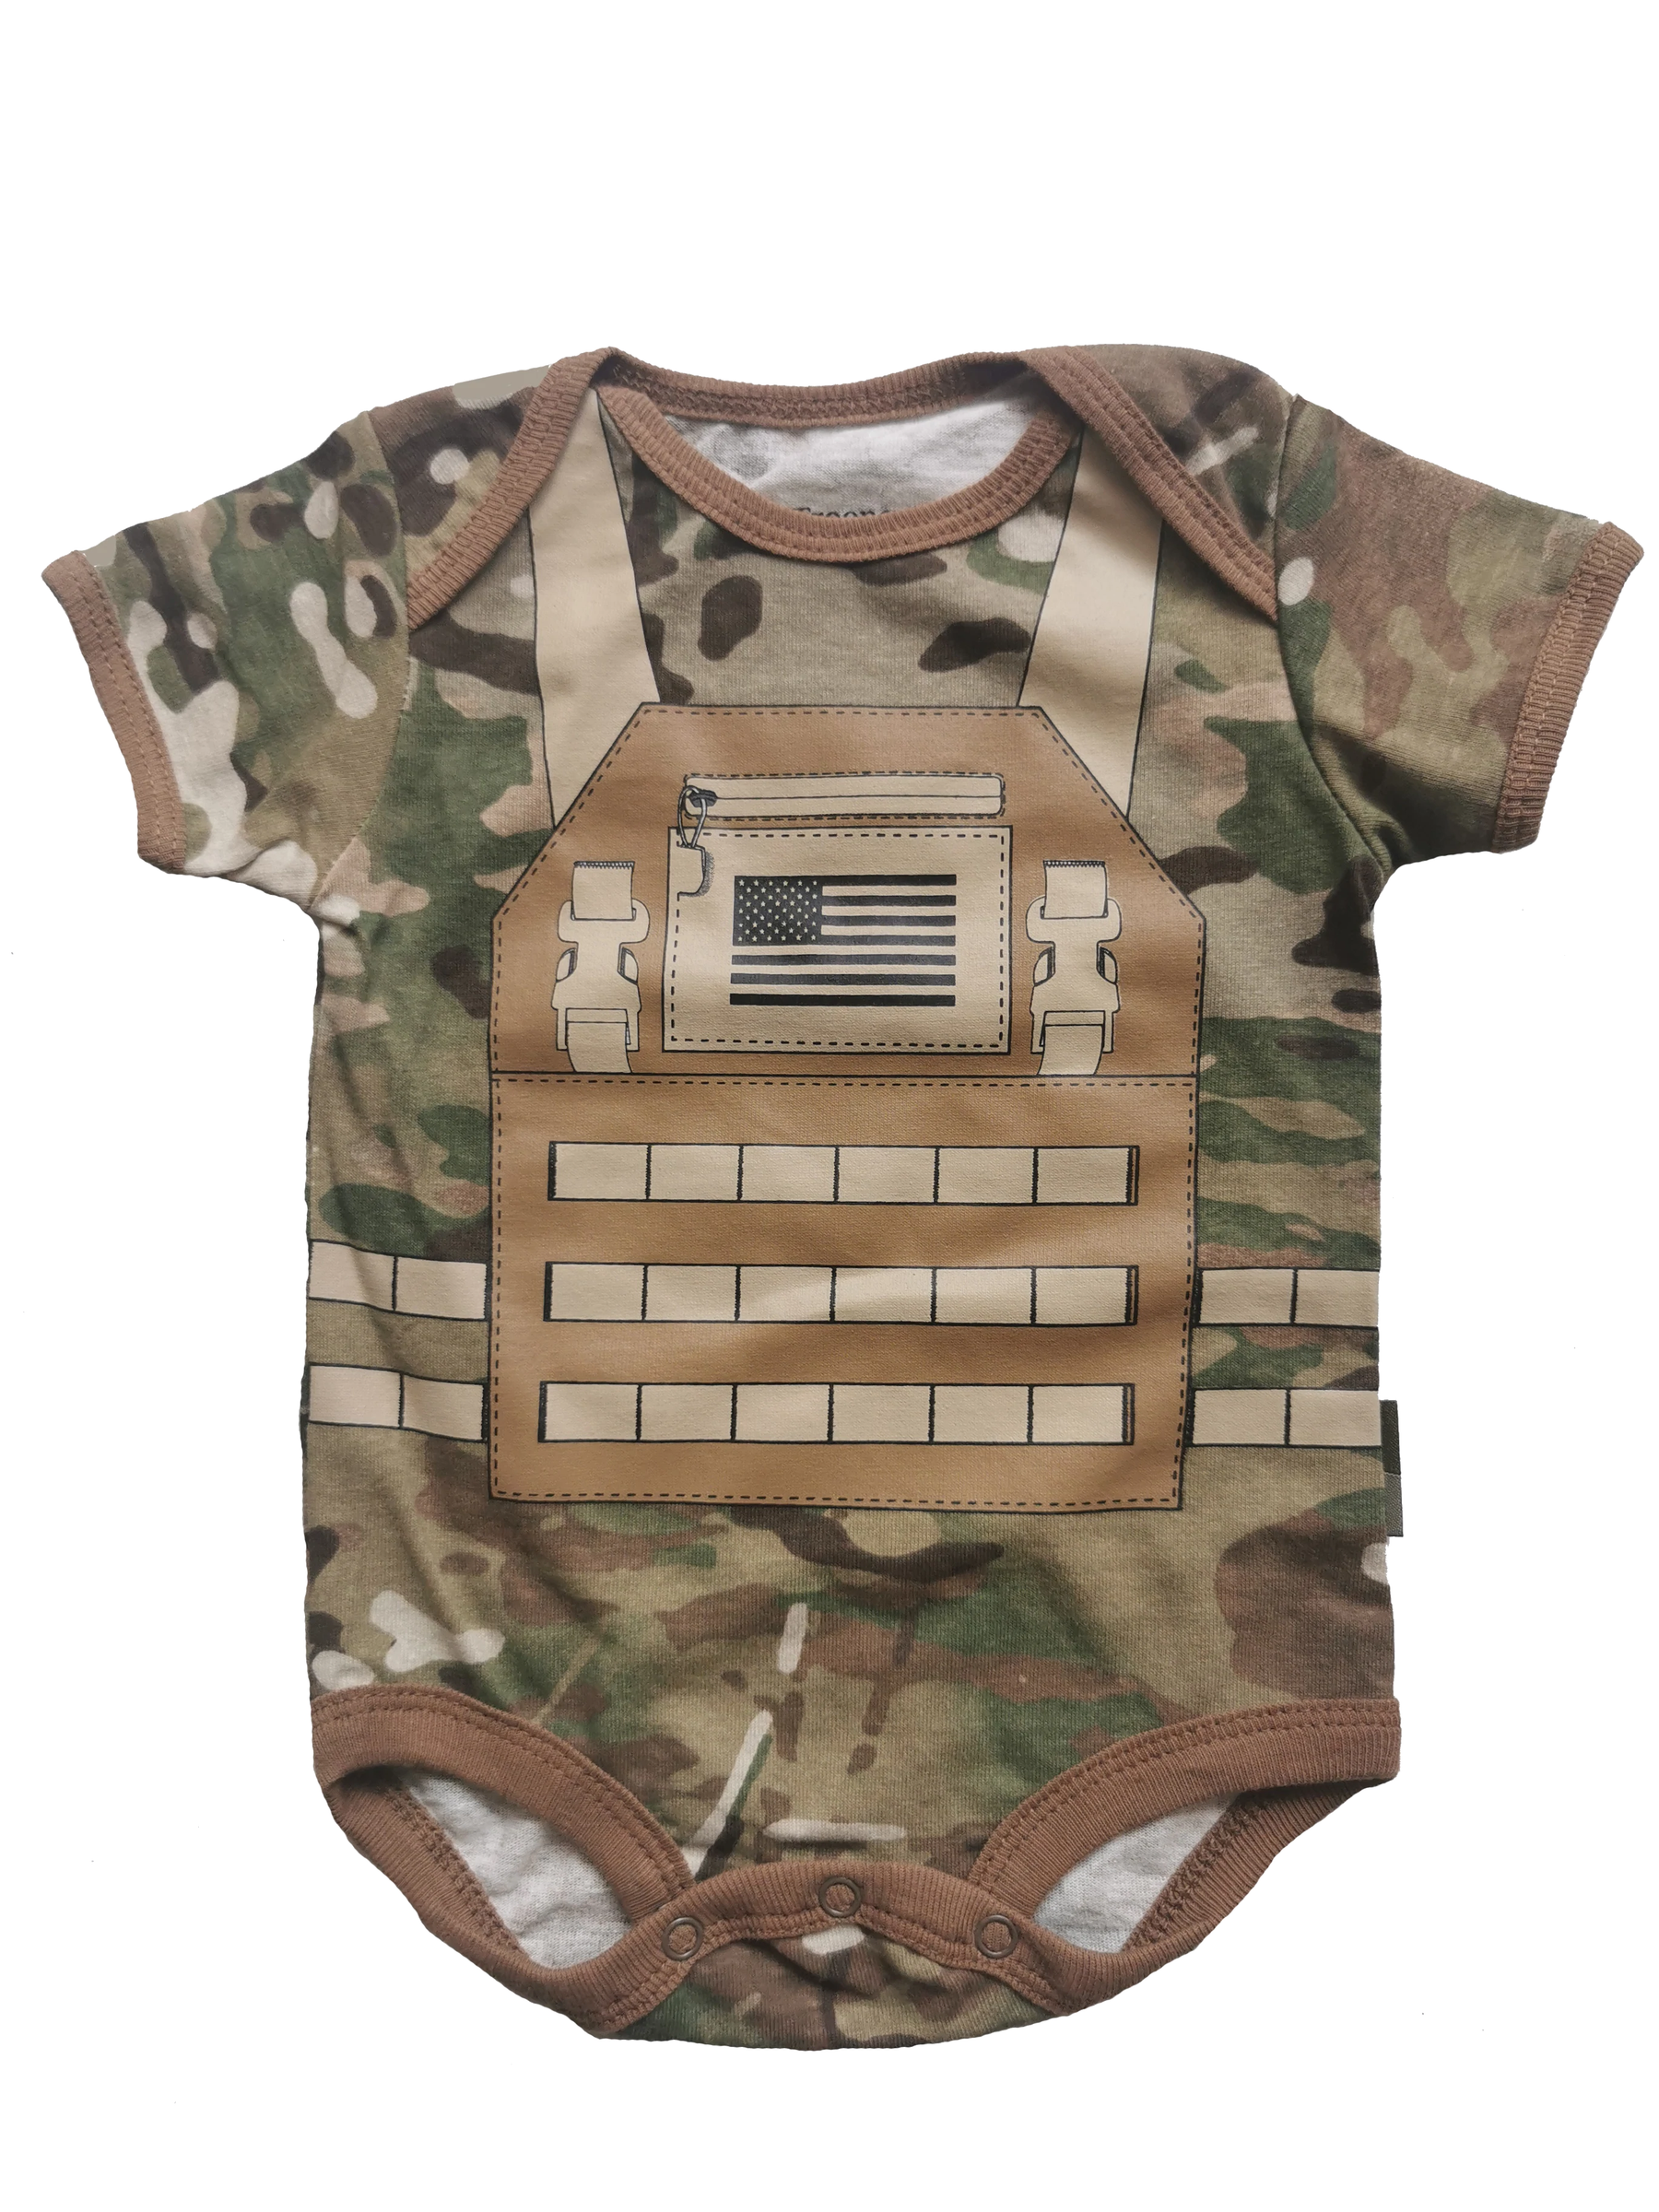  Multicam/OCP Flak Jacket Baby Bodysuit for Infants